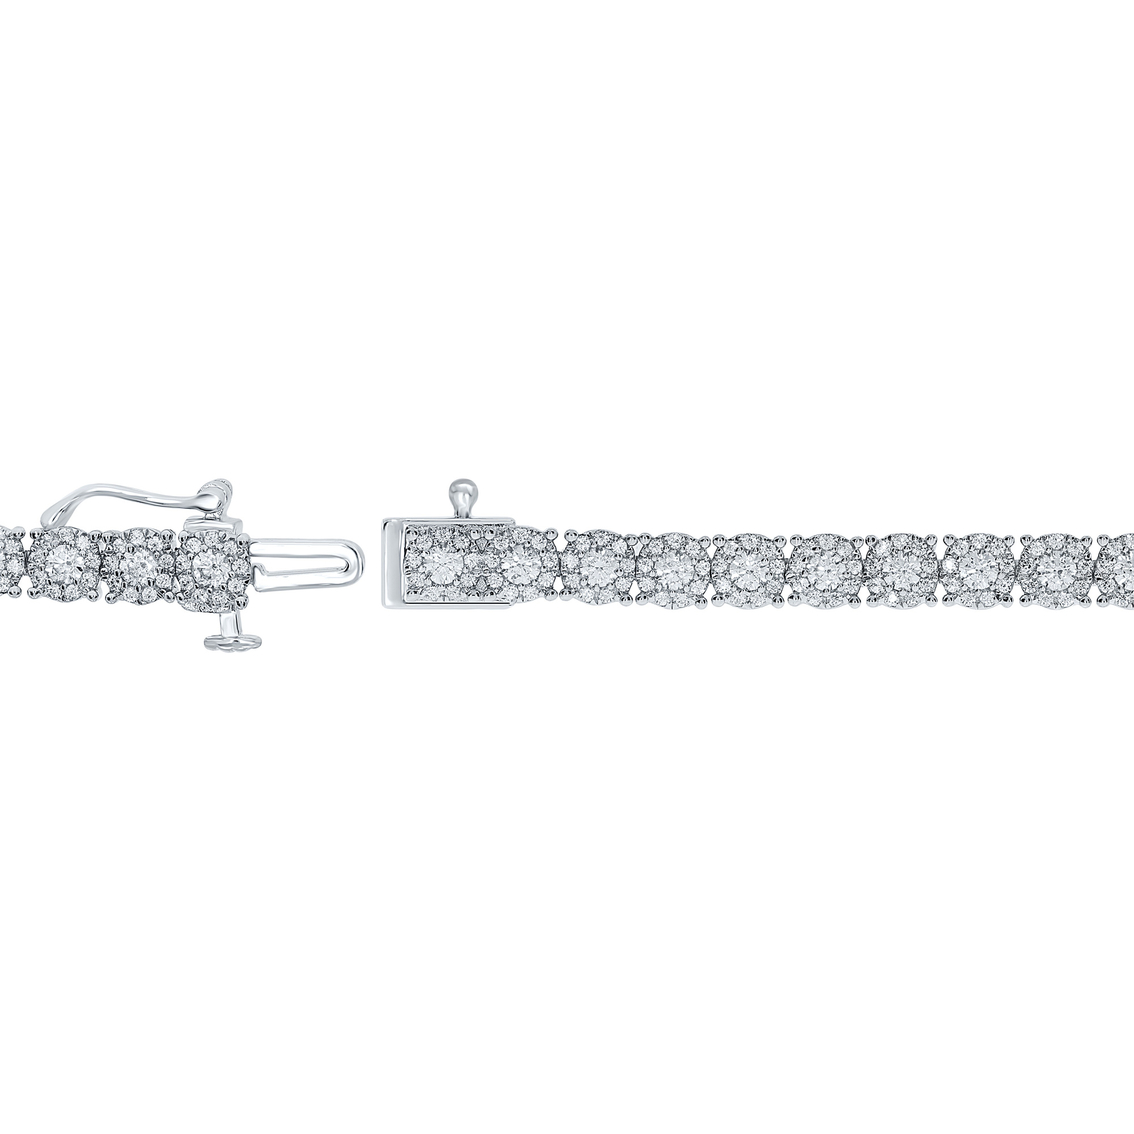 10K White Gold 3 CTW Diamond Tennis Bracelet - Image 2 of 2